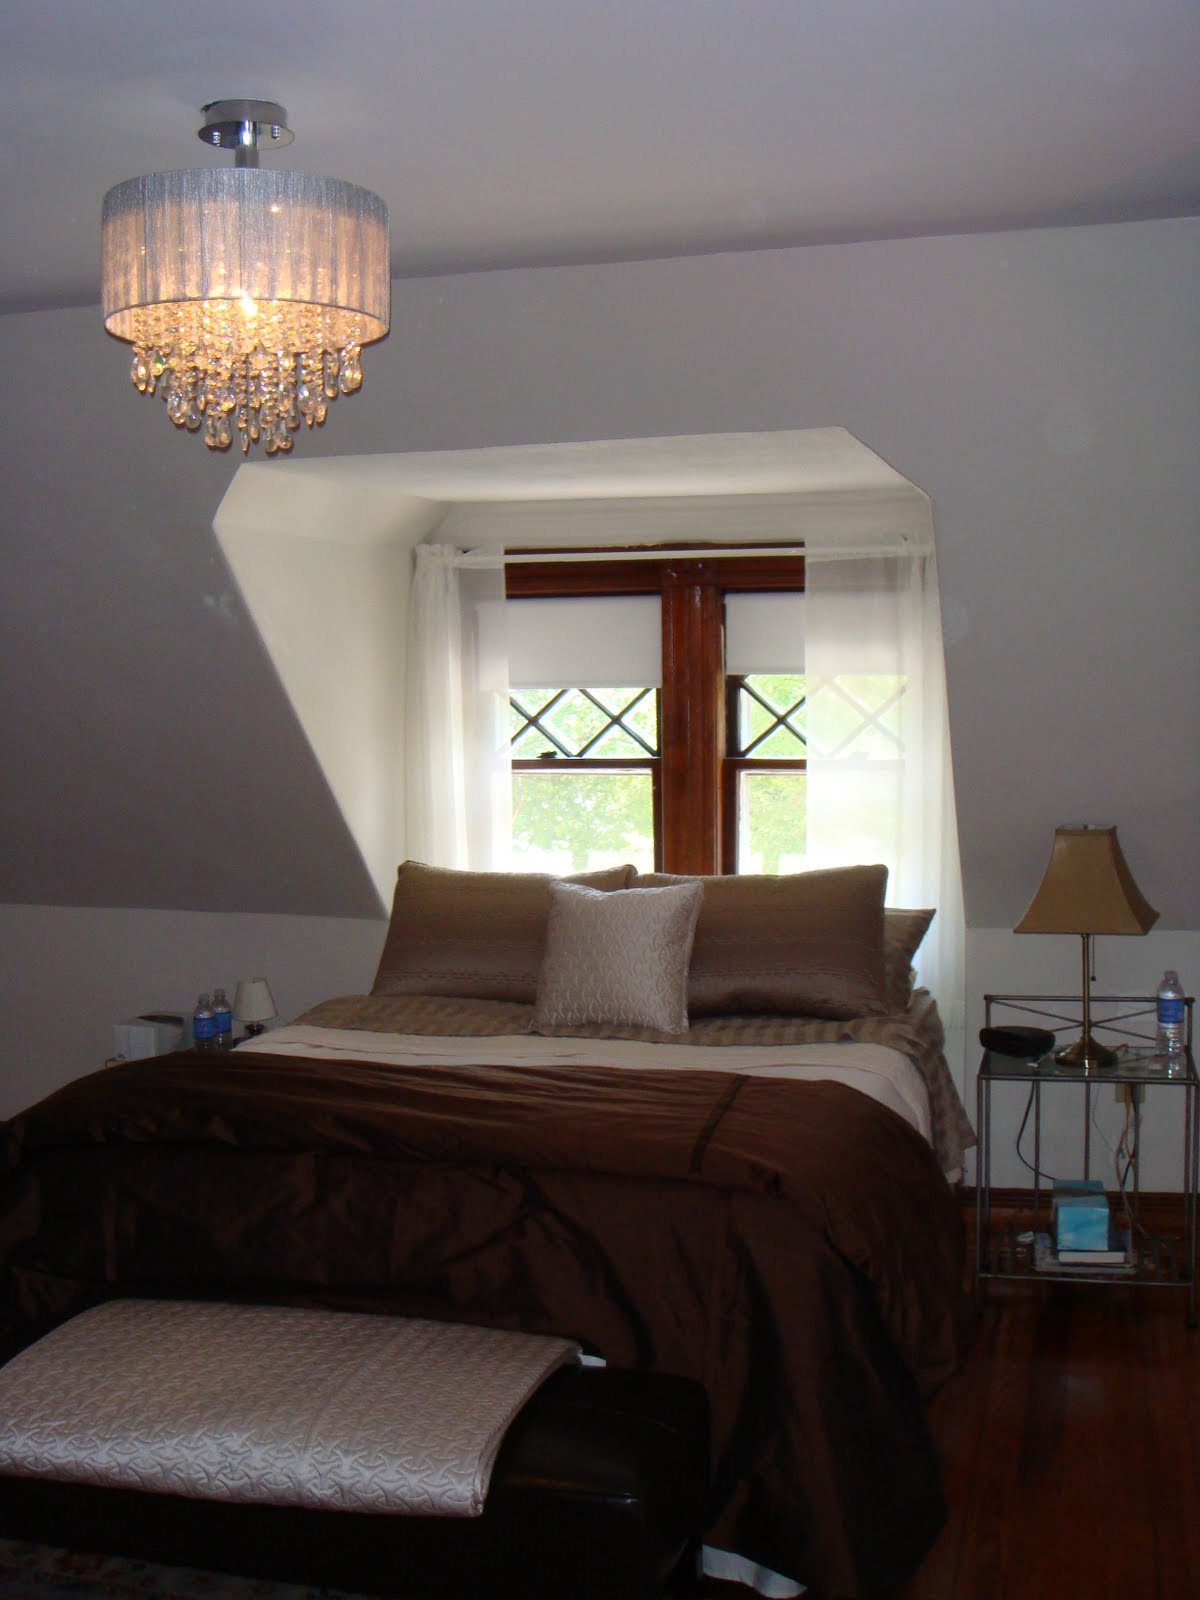 Best Bedroom Ceiling Lights
 Ceiling Bedroom Light Fixtures Simple And Easy Rustic